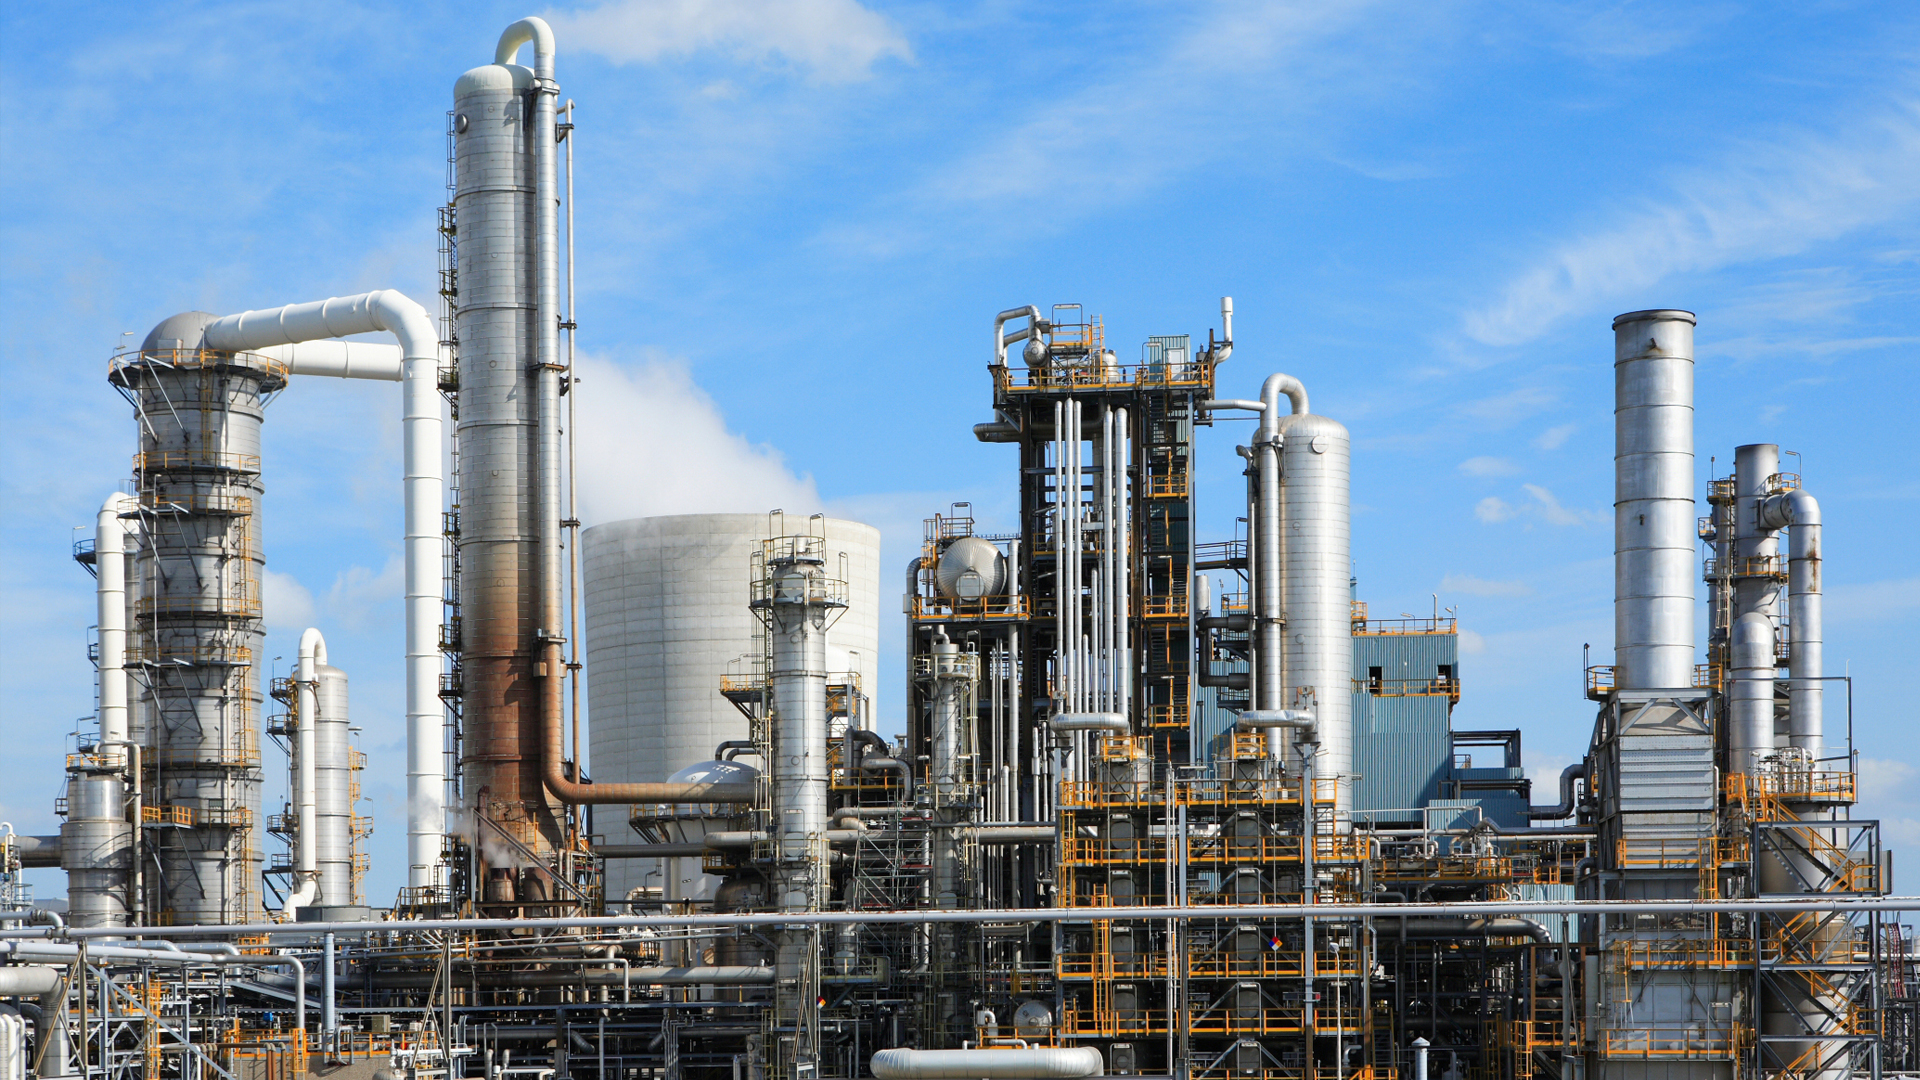 PSA Nitrogen Plant For Chemical Industry